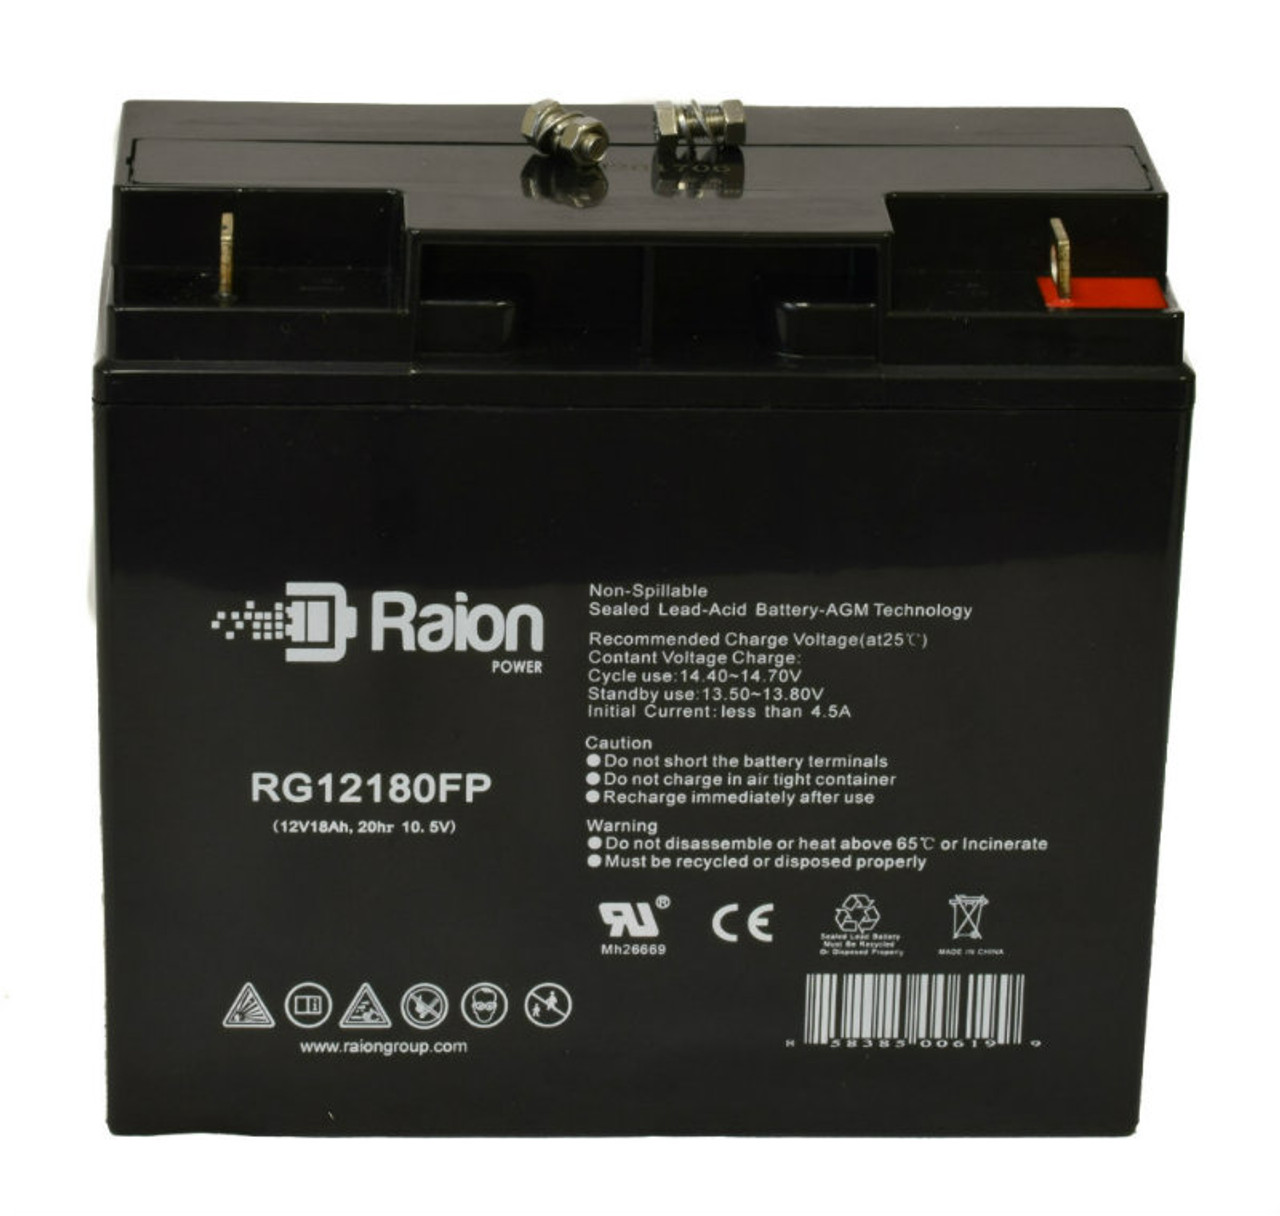 Raion Power RG12180FP 12V 18Ah Lead Acid Battery for Remco RM12-18DC